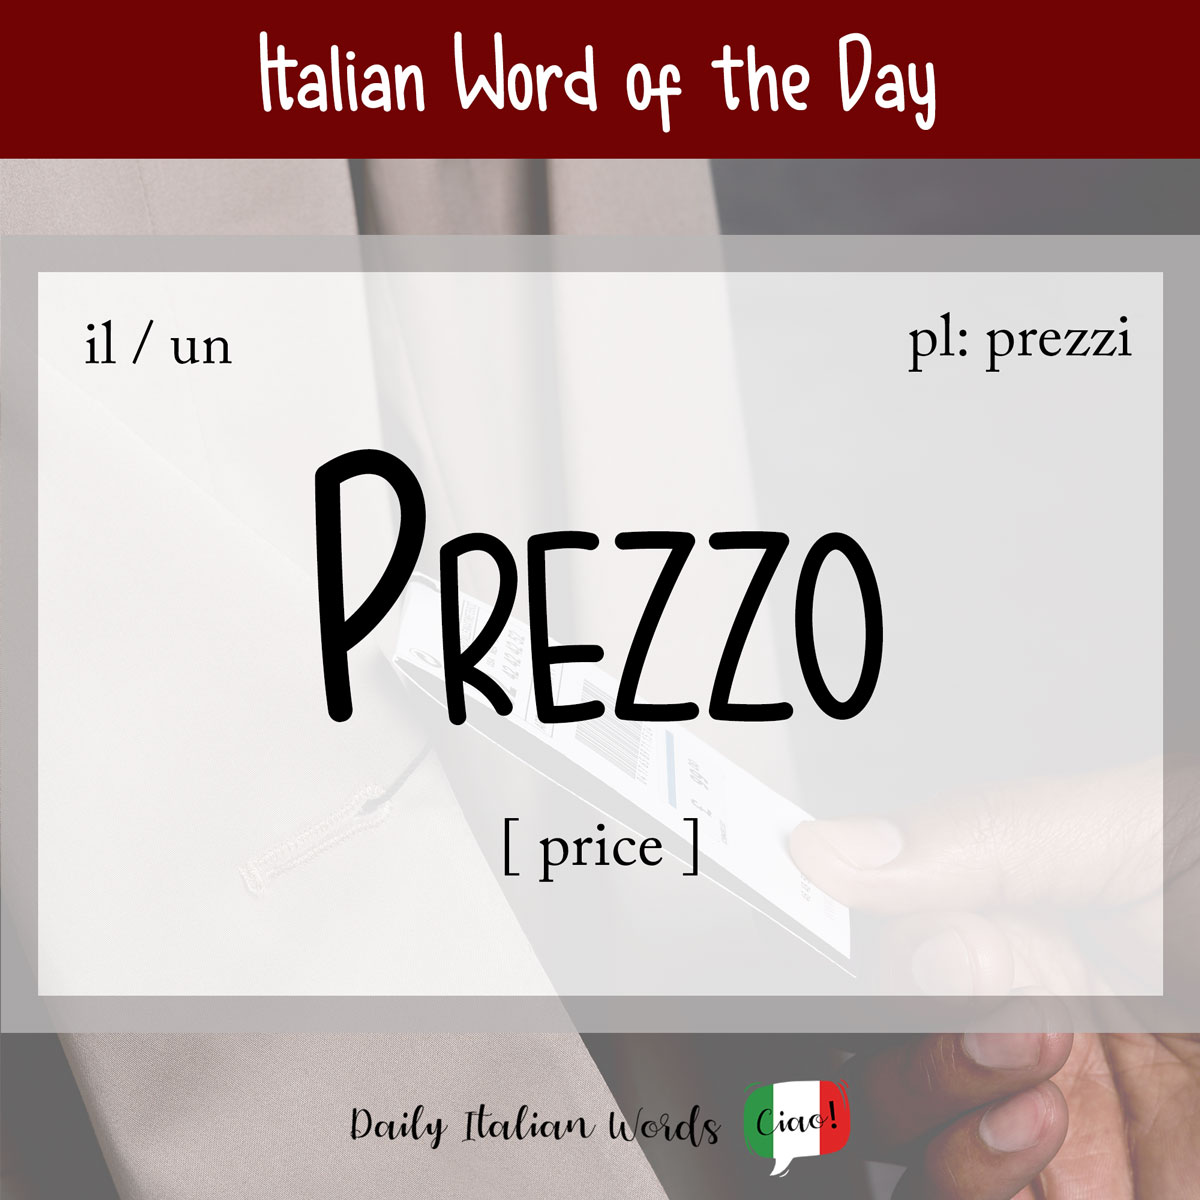 Italian word of the day: Prezzo (price/cost)